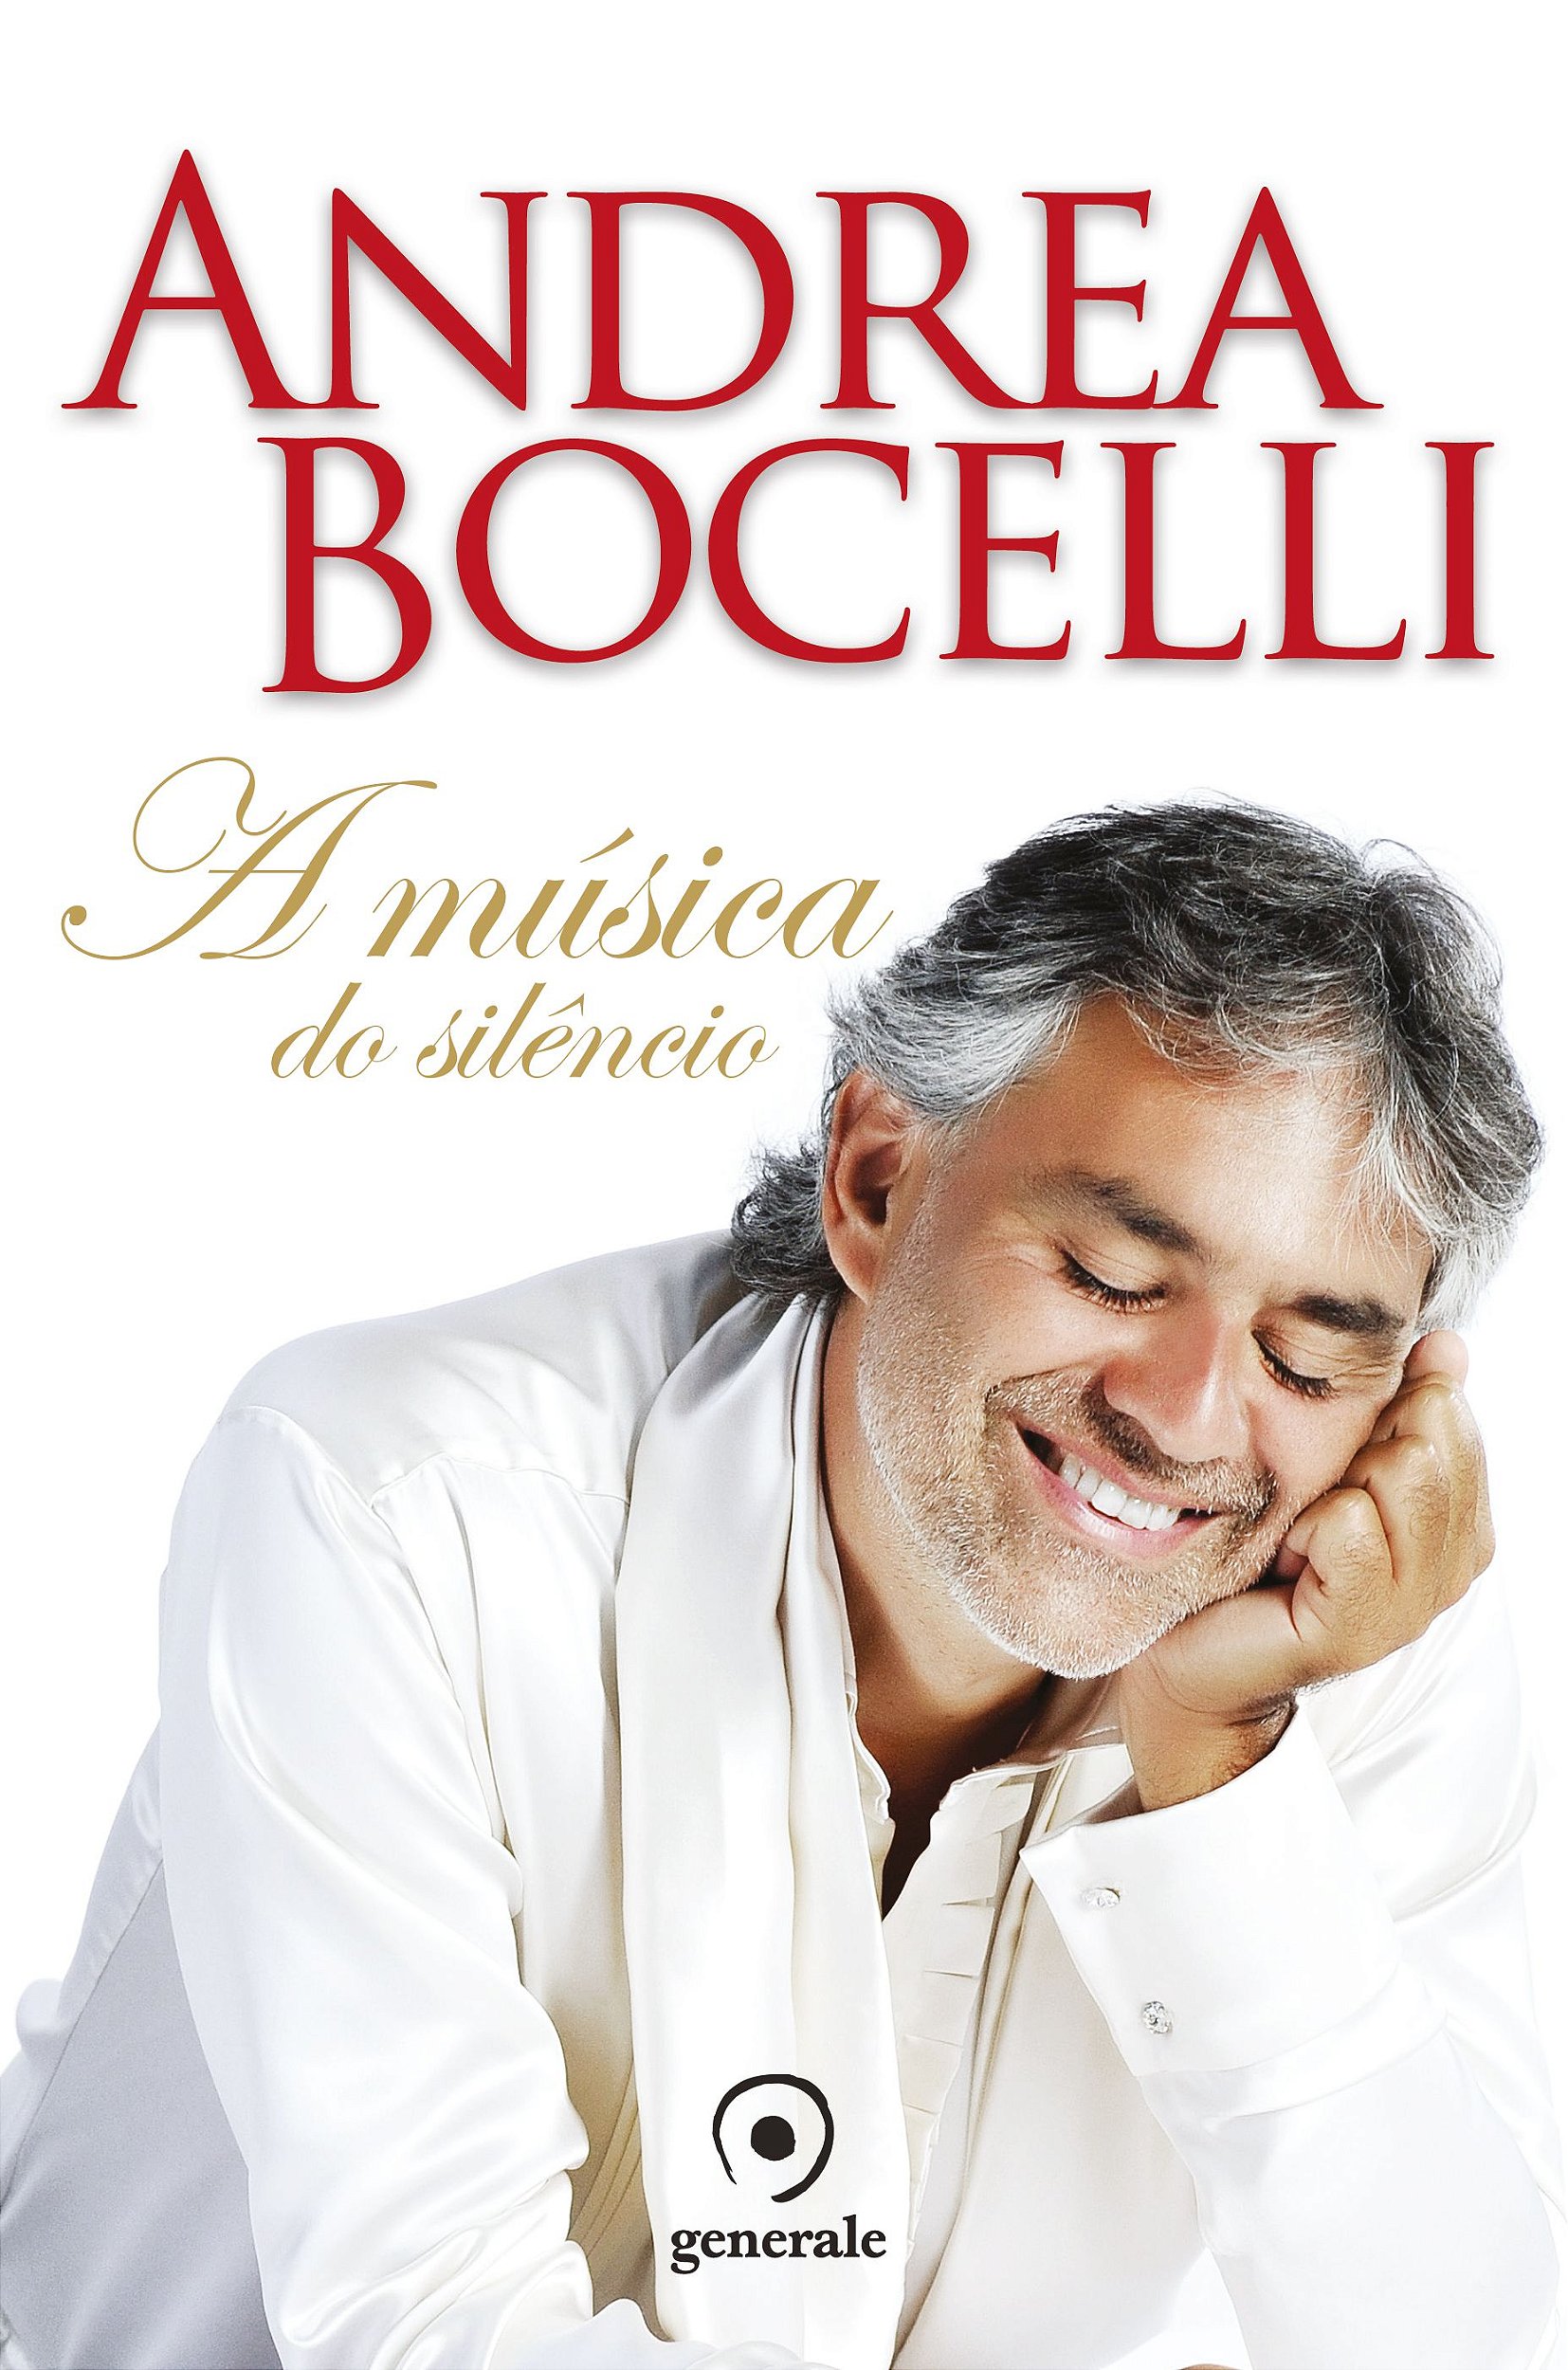 Andrea Bocelli – Wikipédia, a enciclopédia livre